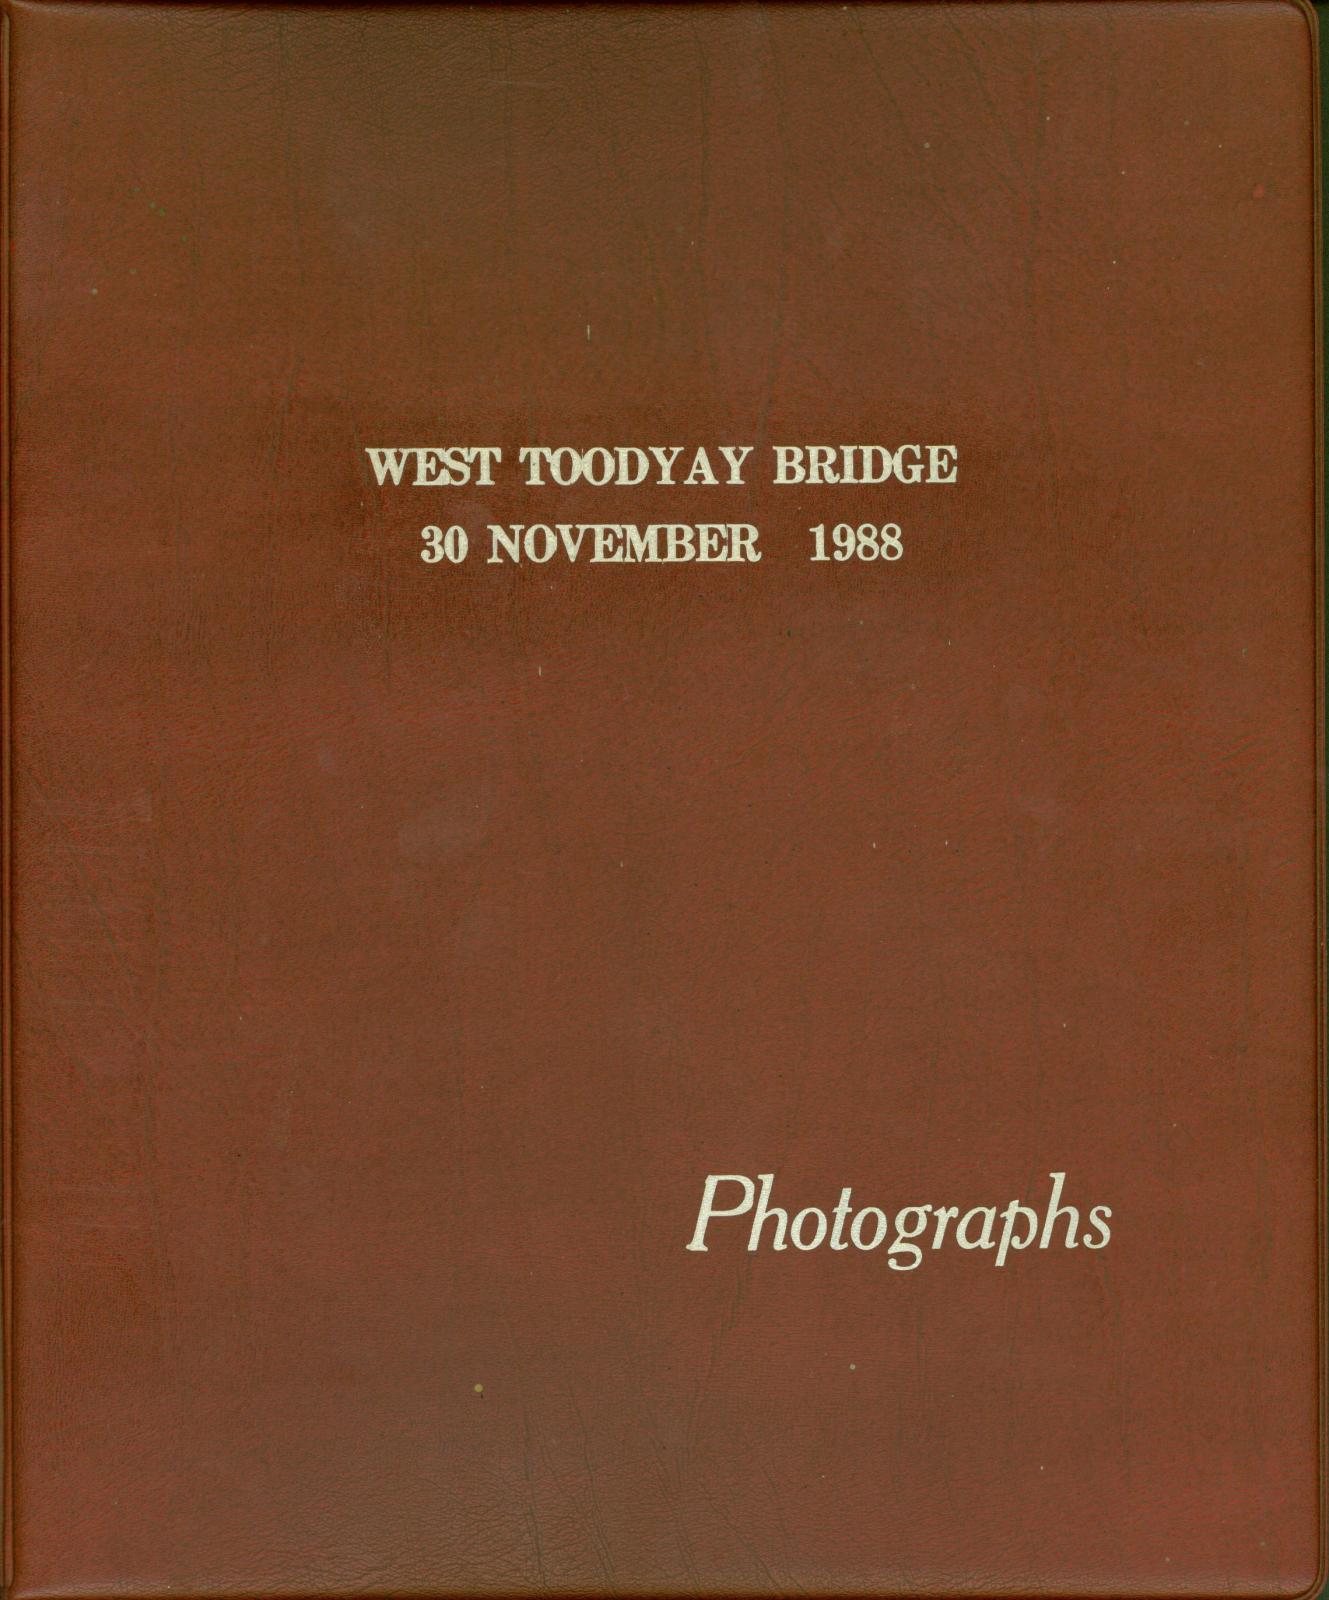 Album cover, West Toodyay Bridge opening 1988